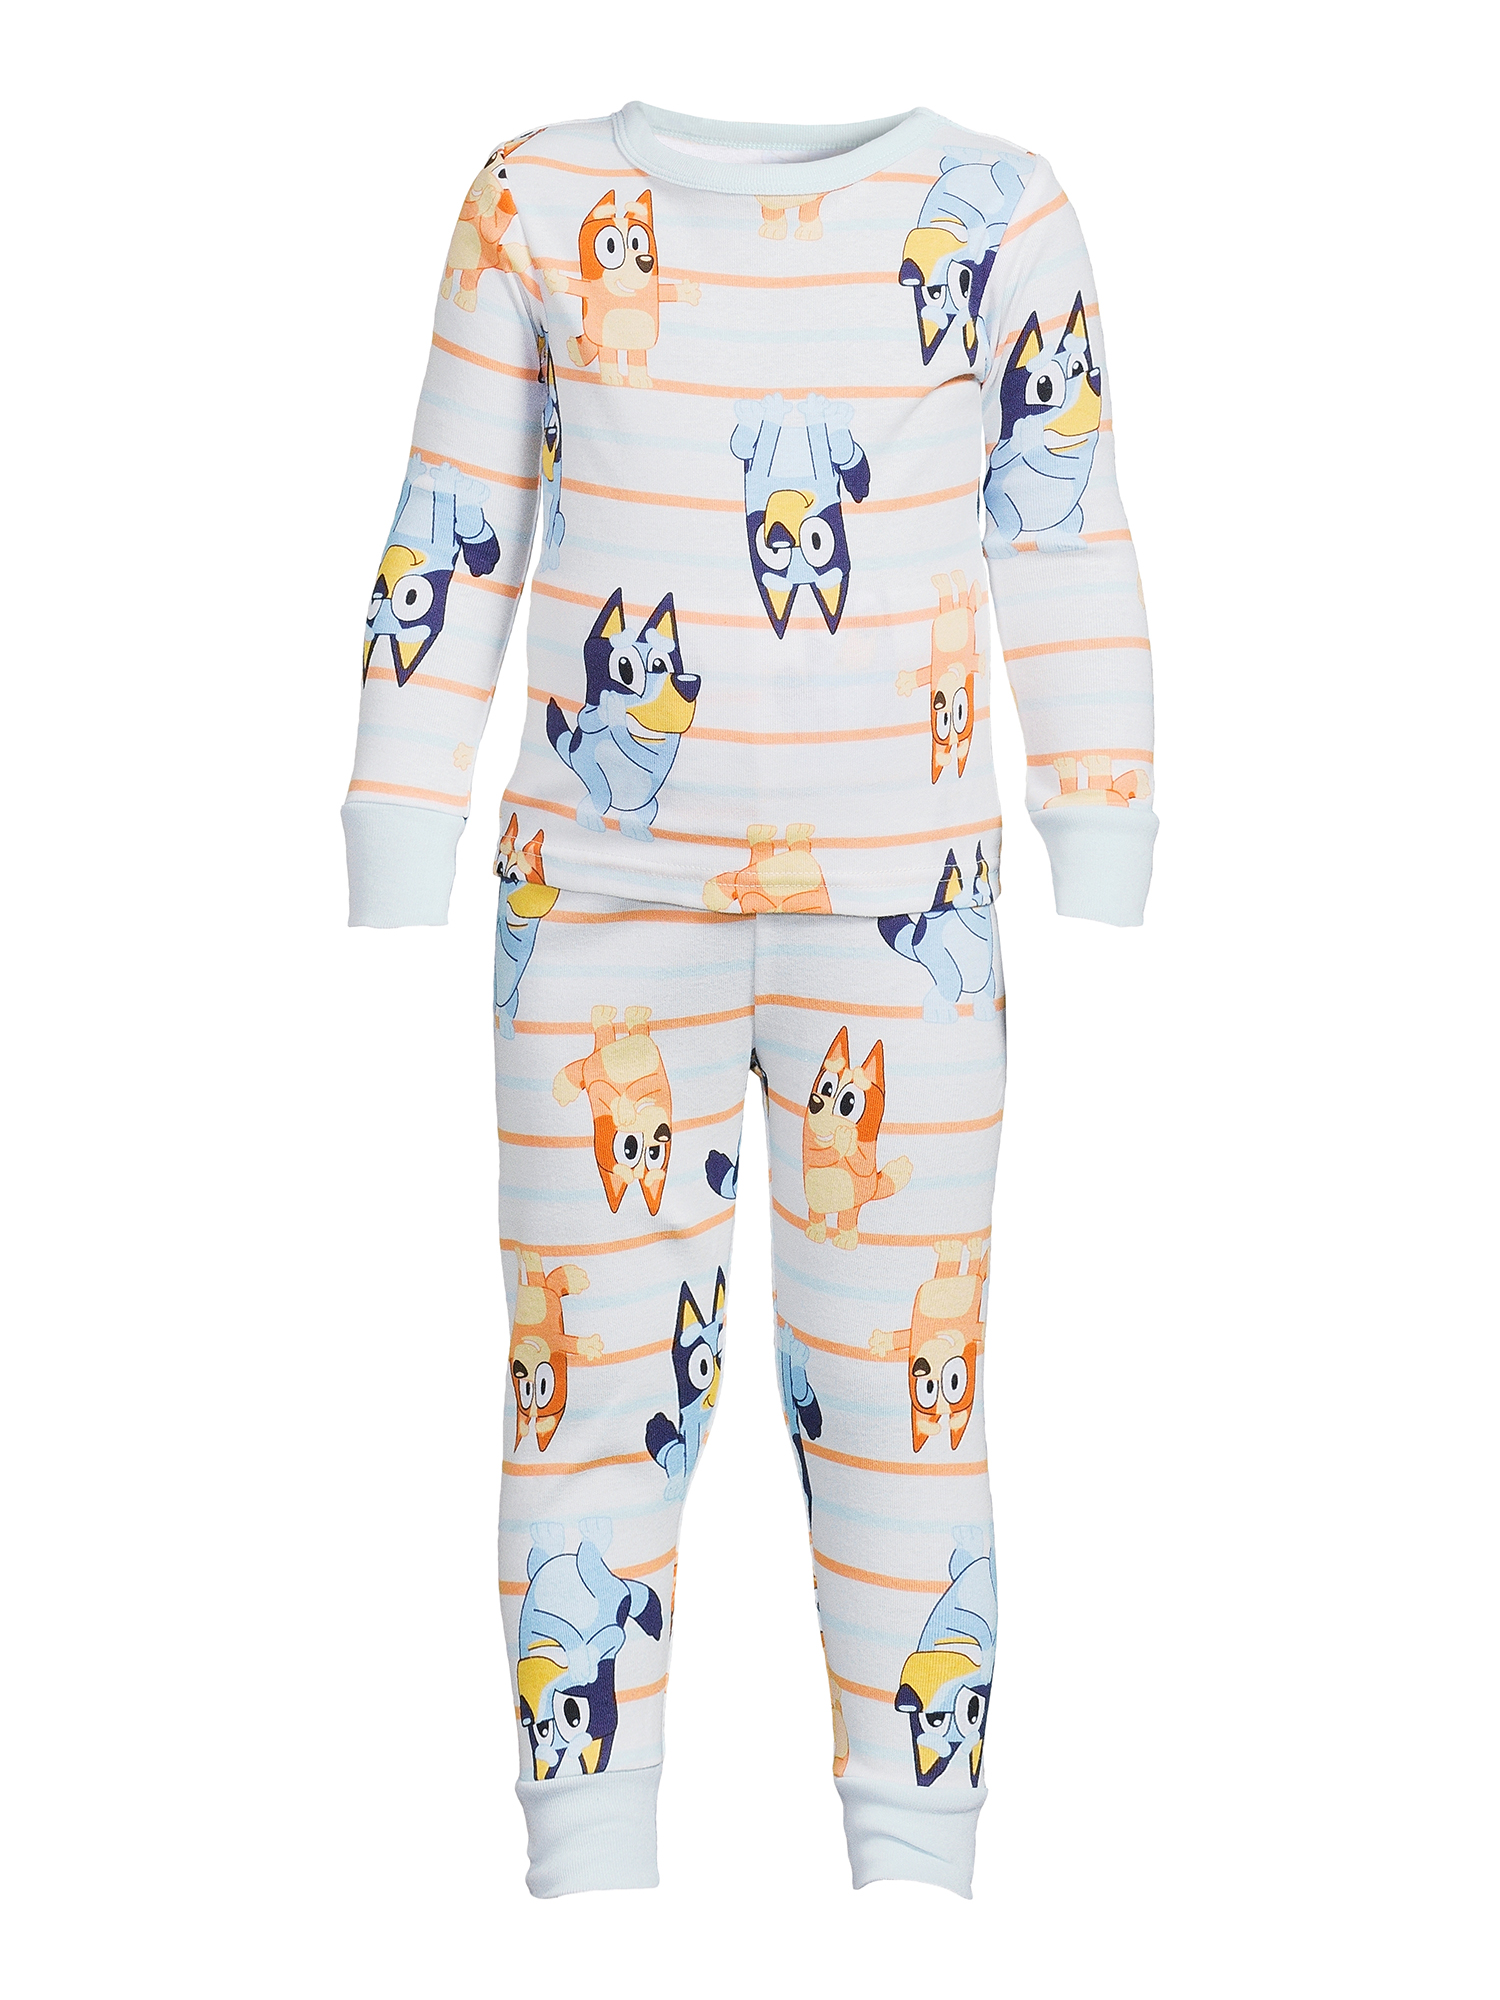 Bluey Toddler Unisex Long Sleeve Top and Pants, 2-Piece Pajama Set, Sizes 12M-5T - image 3 of 9